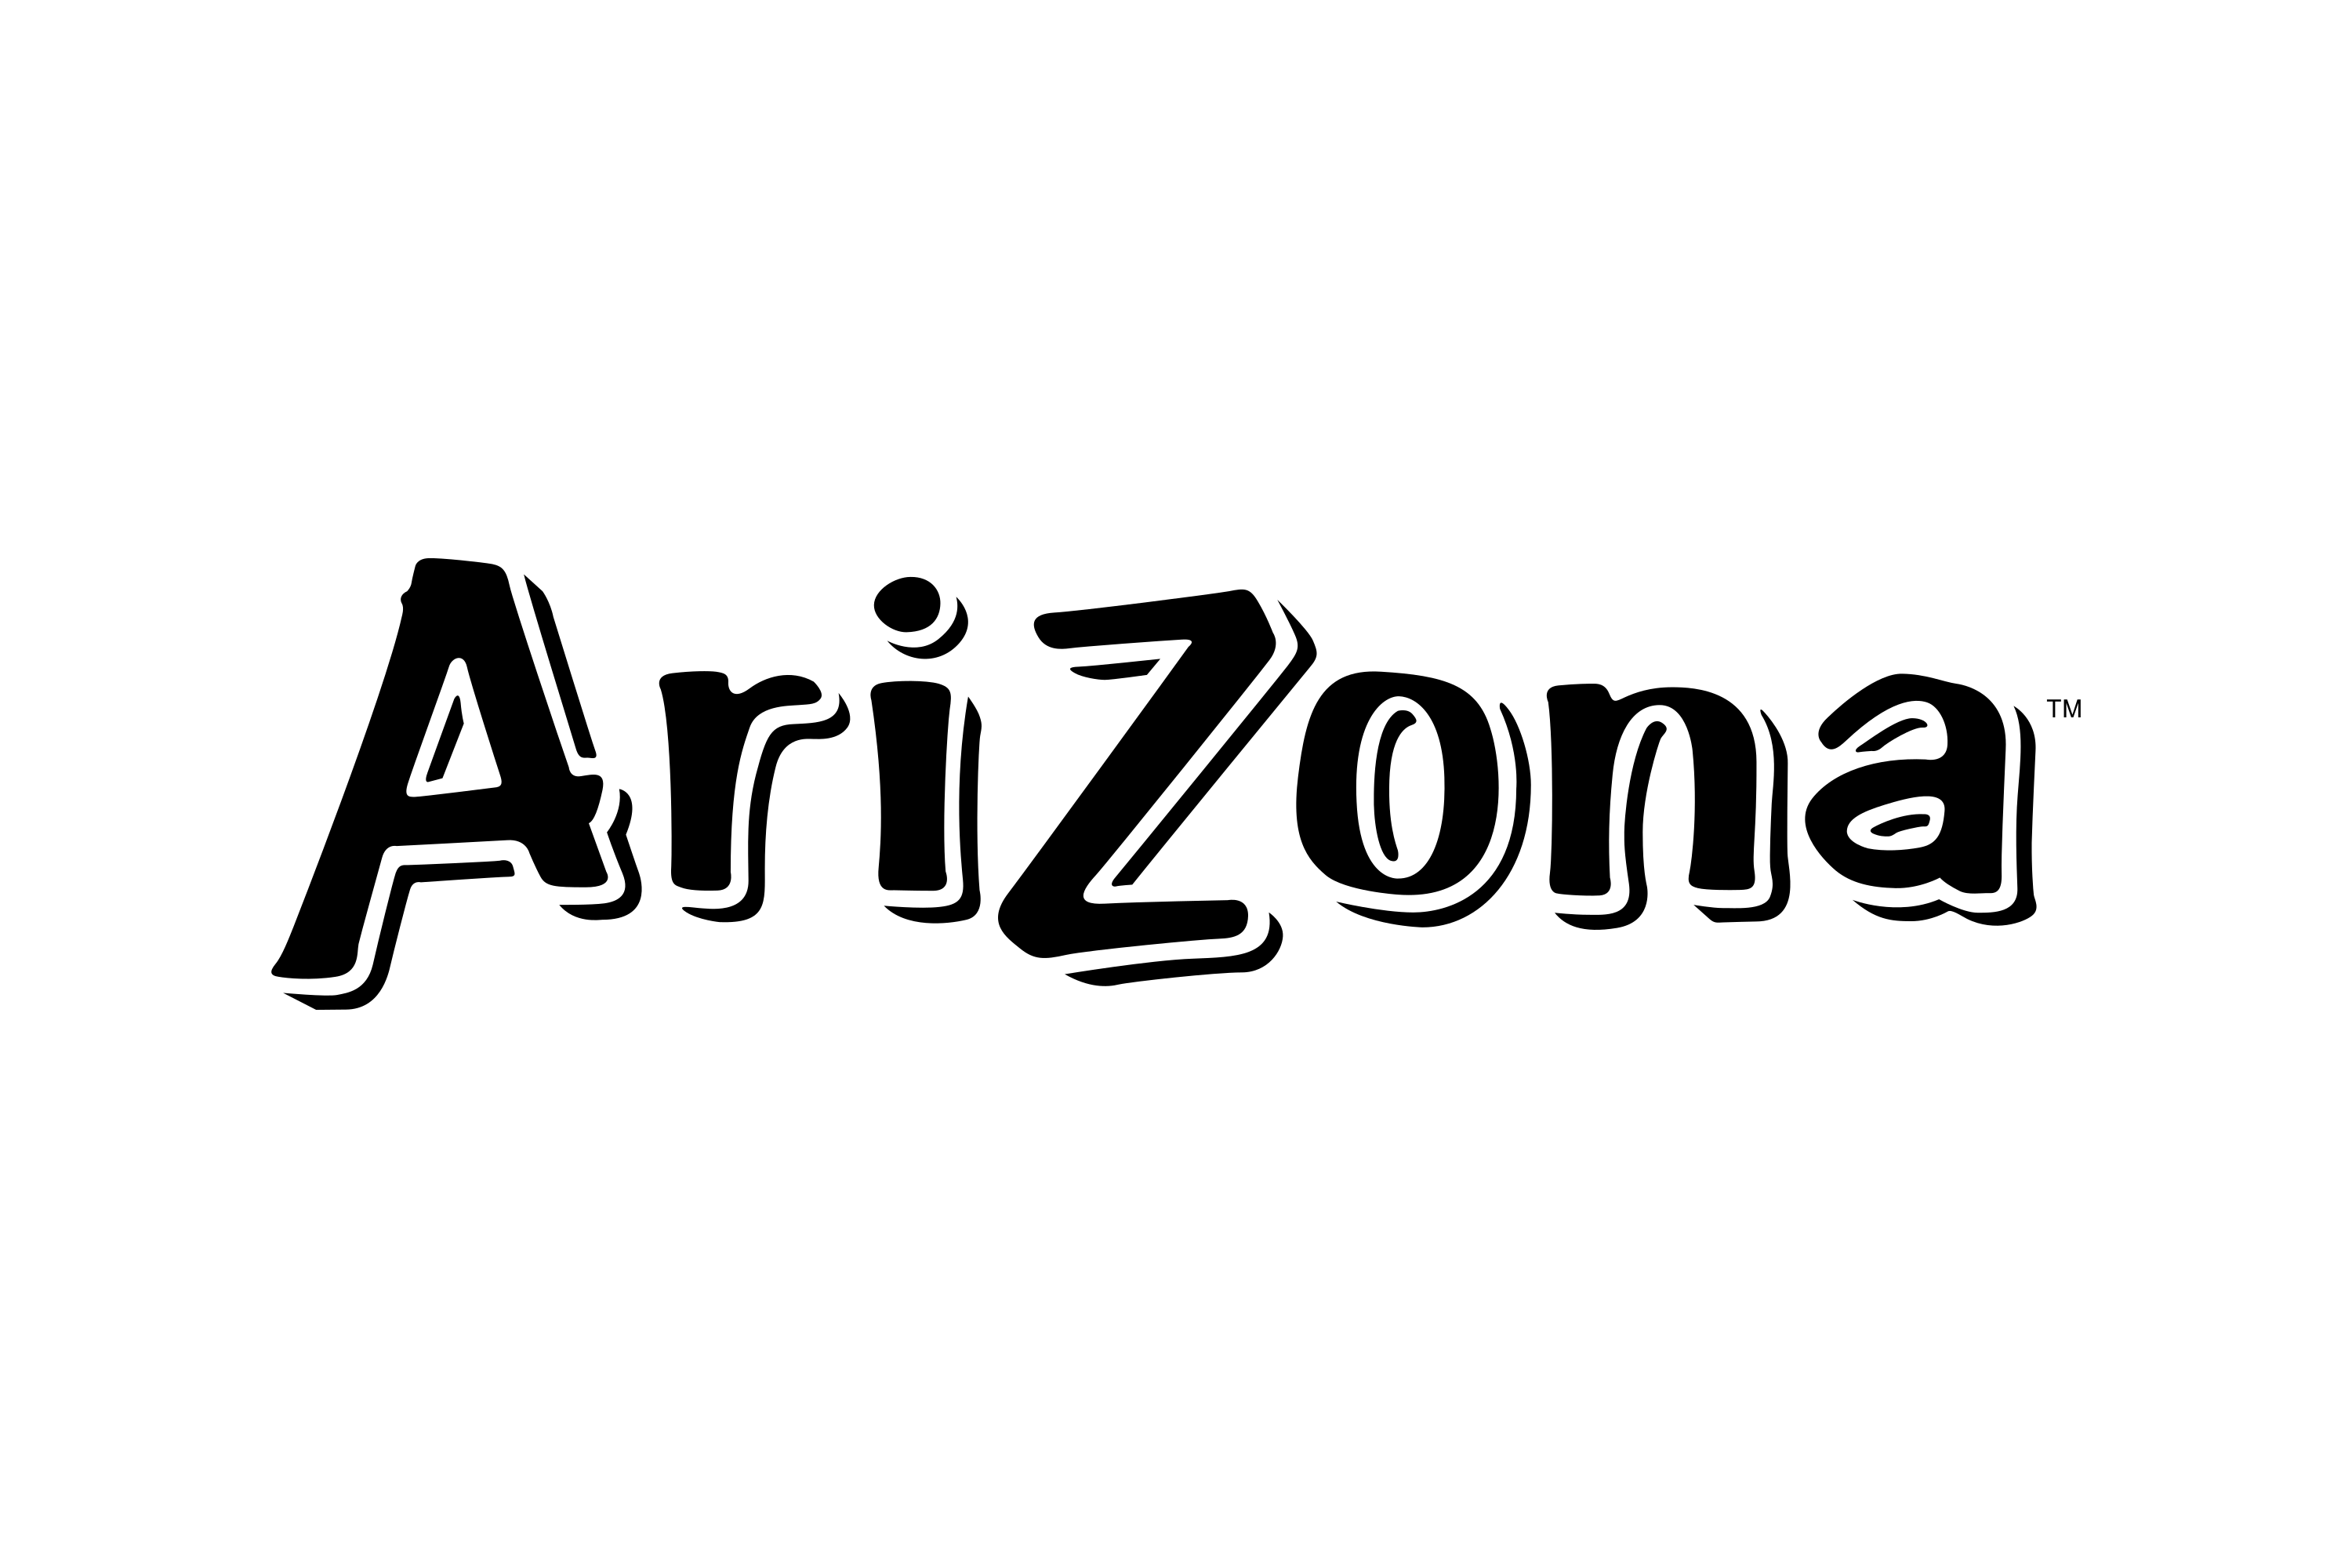 Arizona Beverage Company Logo